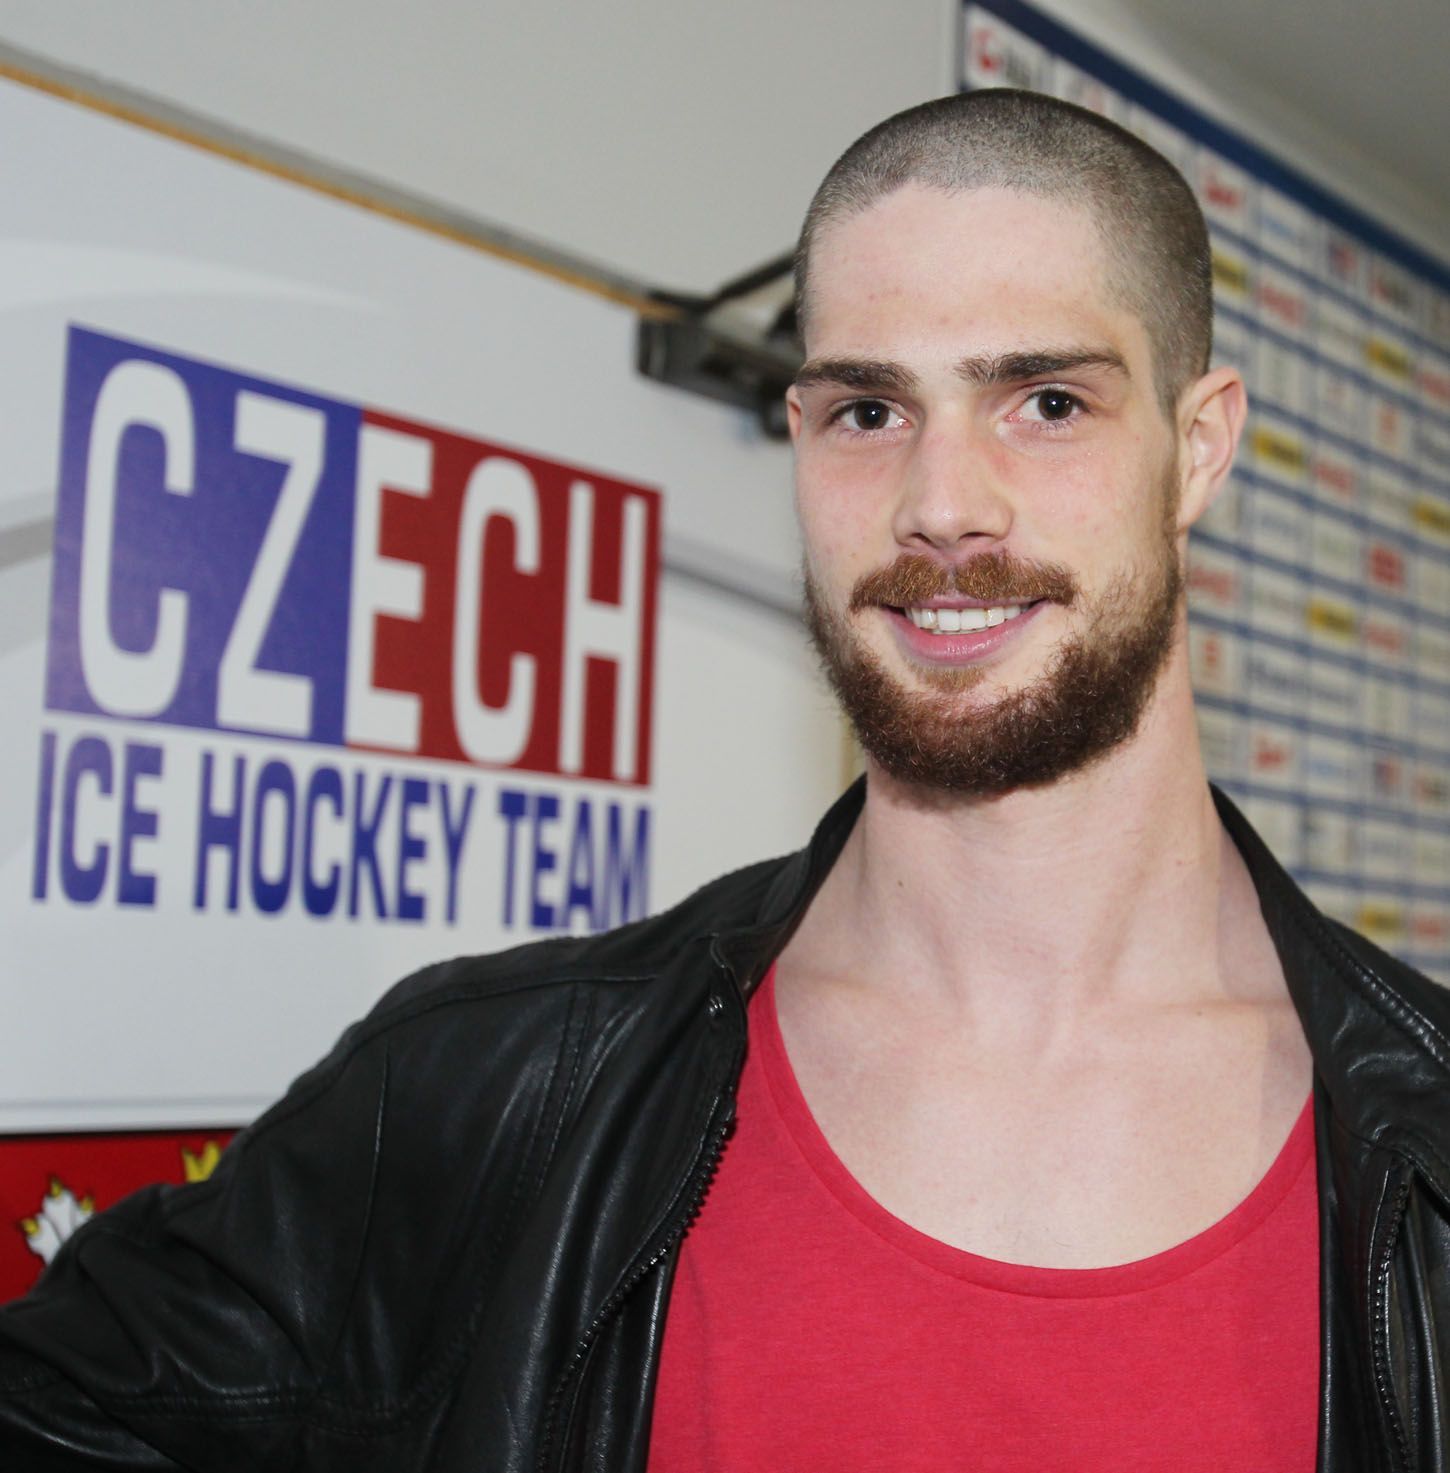 Trénink české hokejové reprezentace (Alexandr Salák)